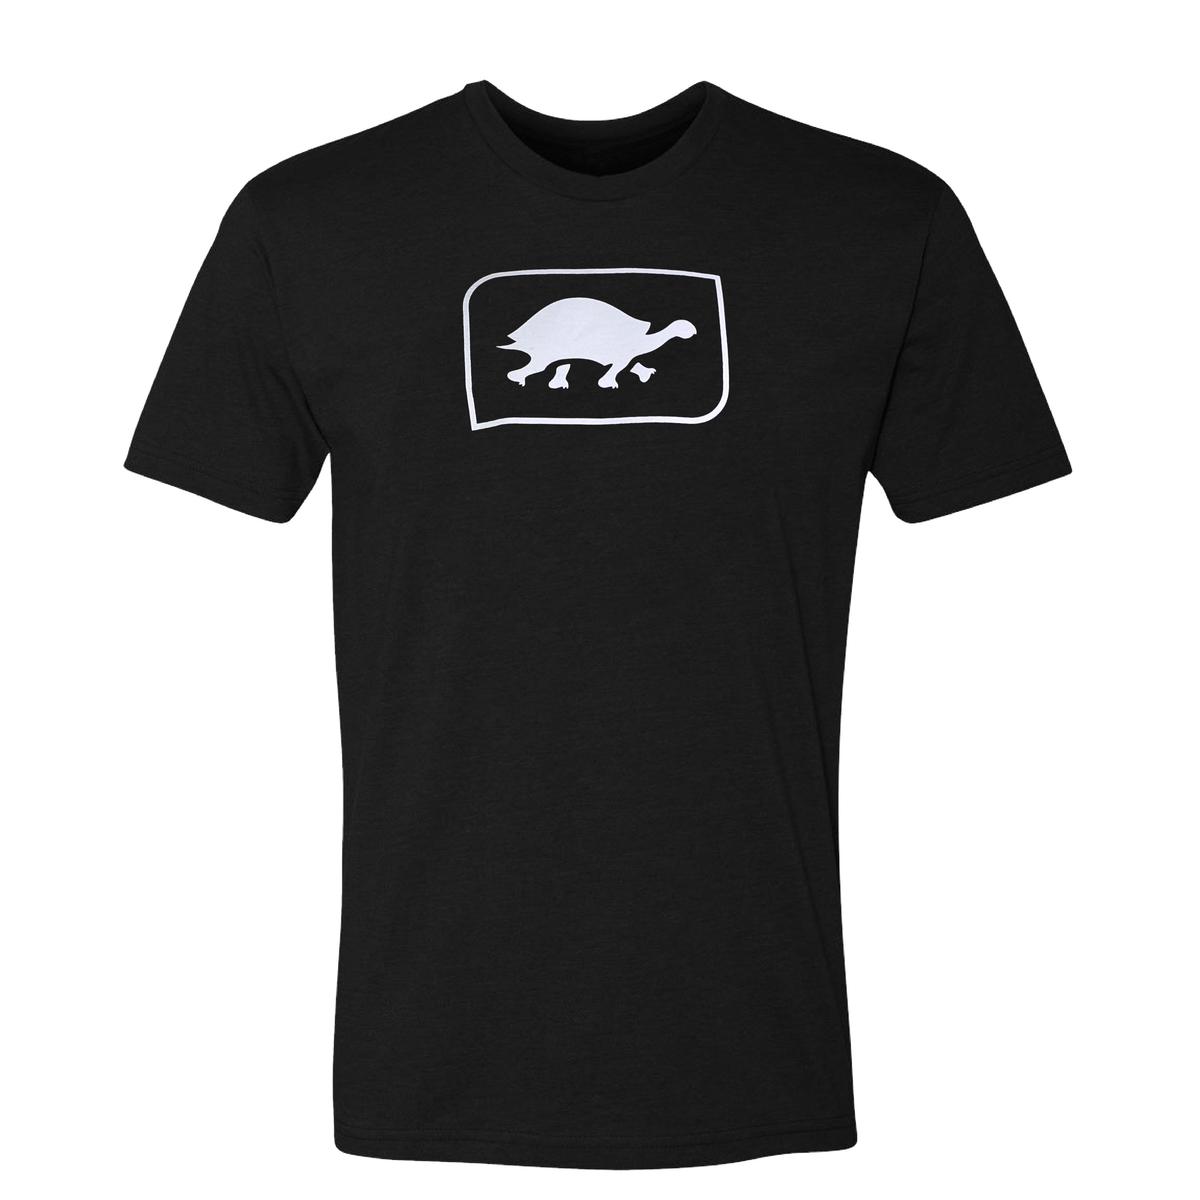 Turtle Fur Kids/Youth Logo T-Shirt, Black / Color-Black